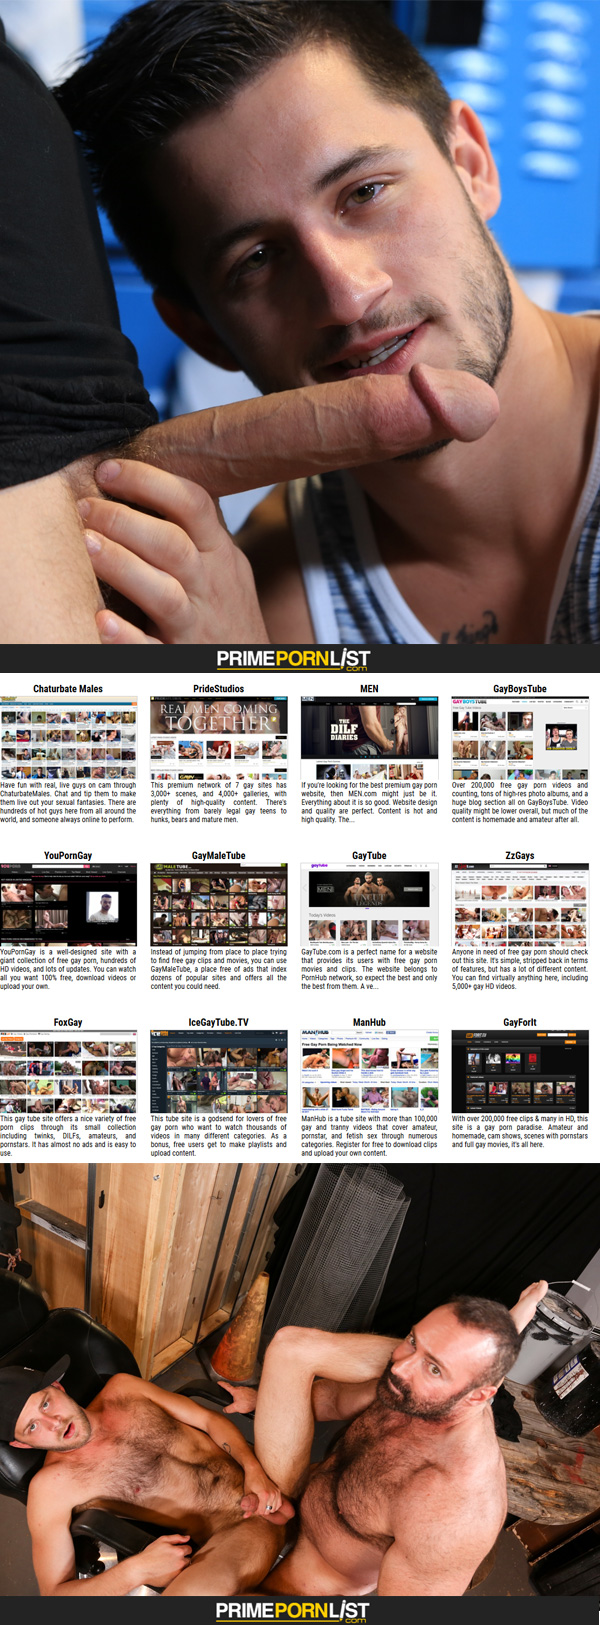 Prime Porn List - Your Favorites Sites Ranked and Categorized image